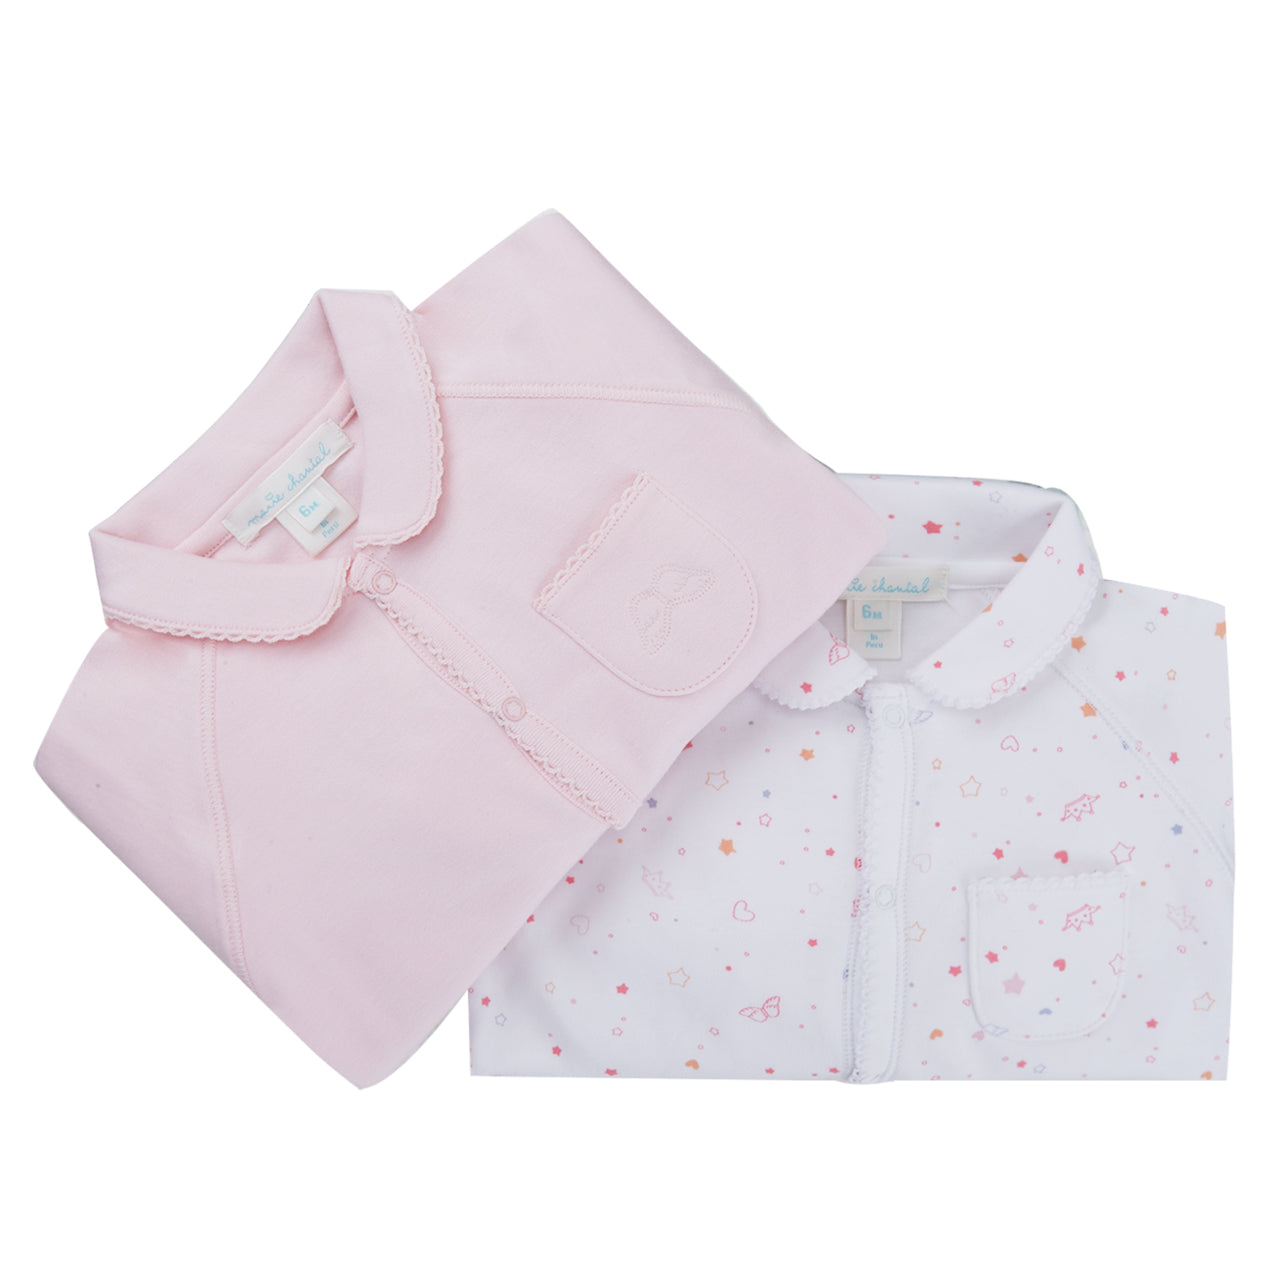 Marie Chantal Sleeper Gift Set - Pink